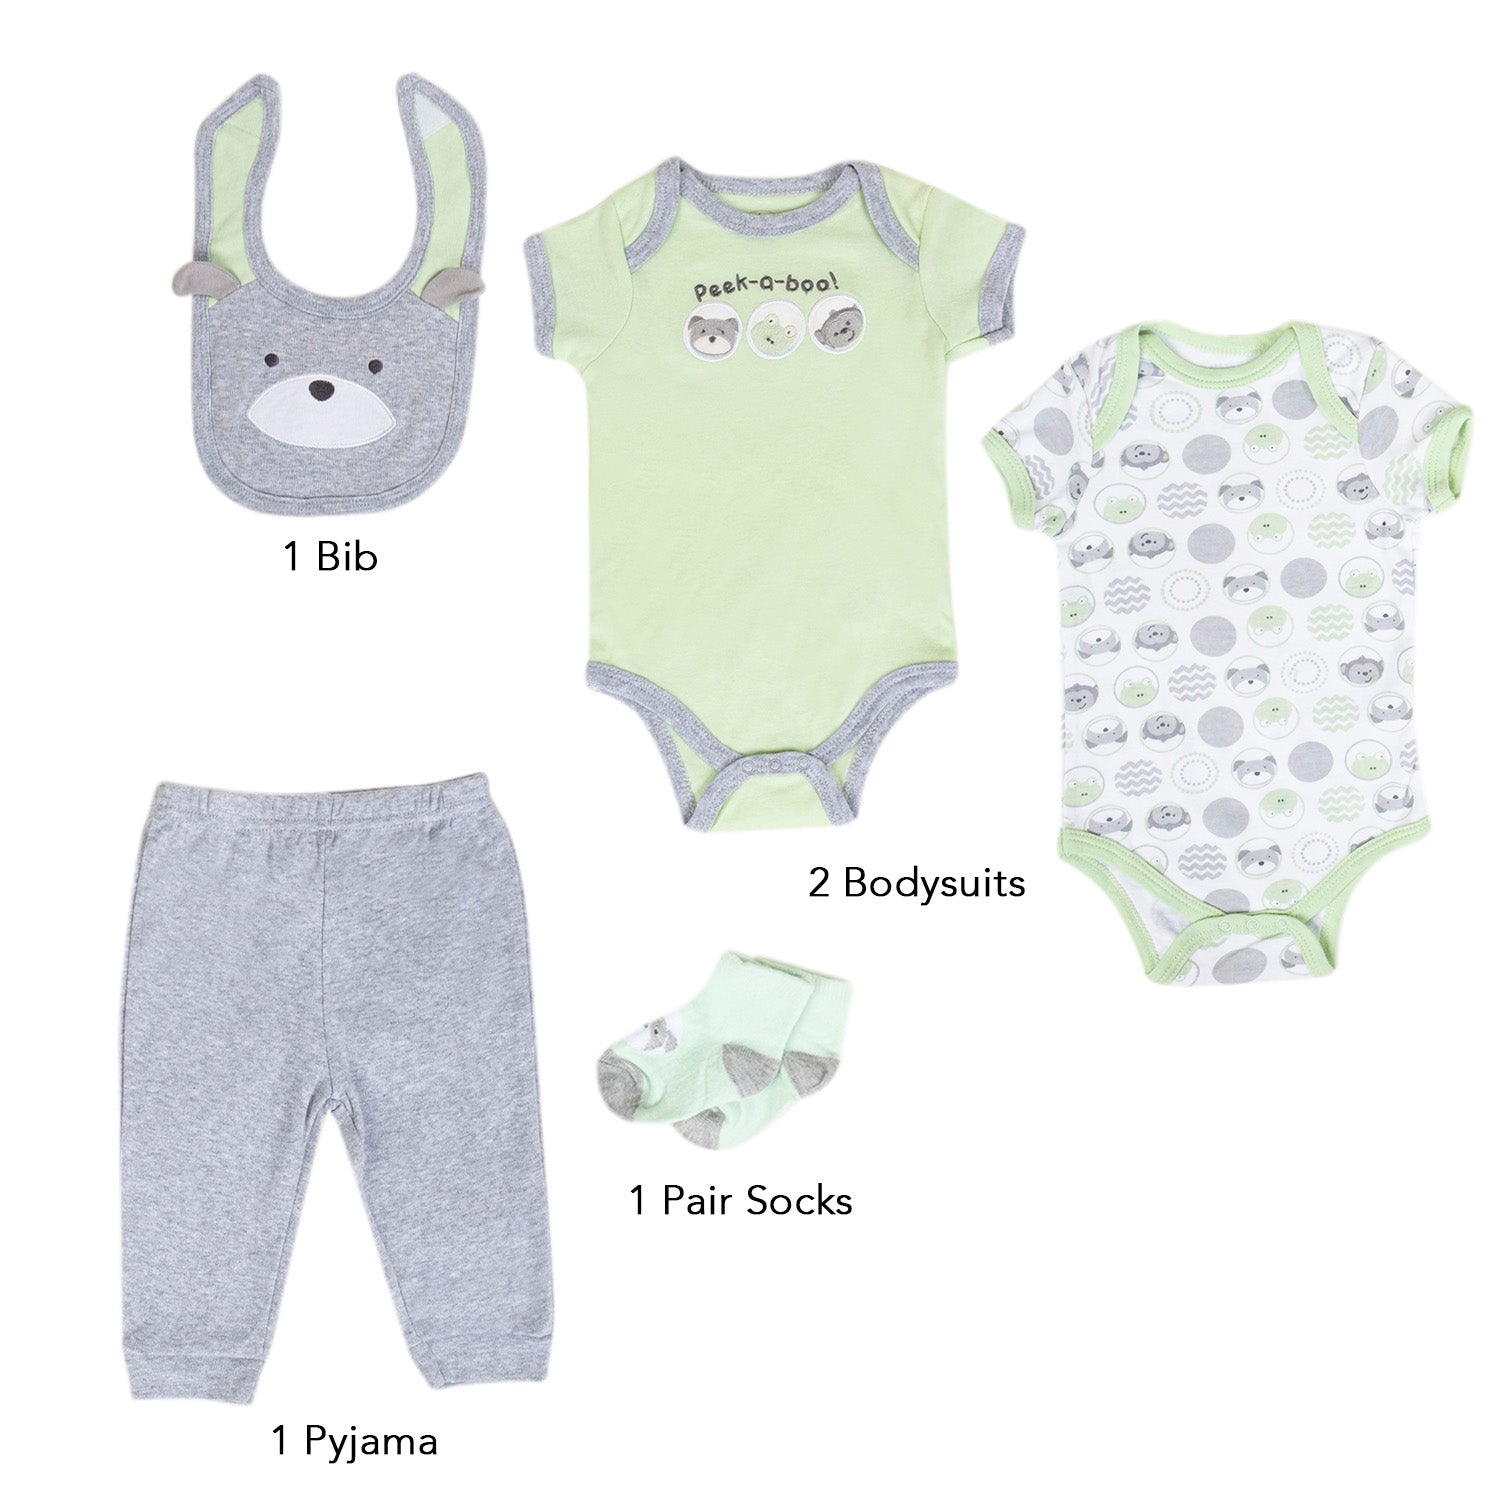 Baby Moo Peek A Boo Gift Set 5 Piece With Bodysuits, Pyjama, Bib And Socks - Green, Grey